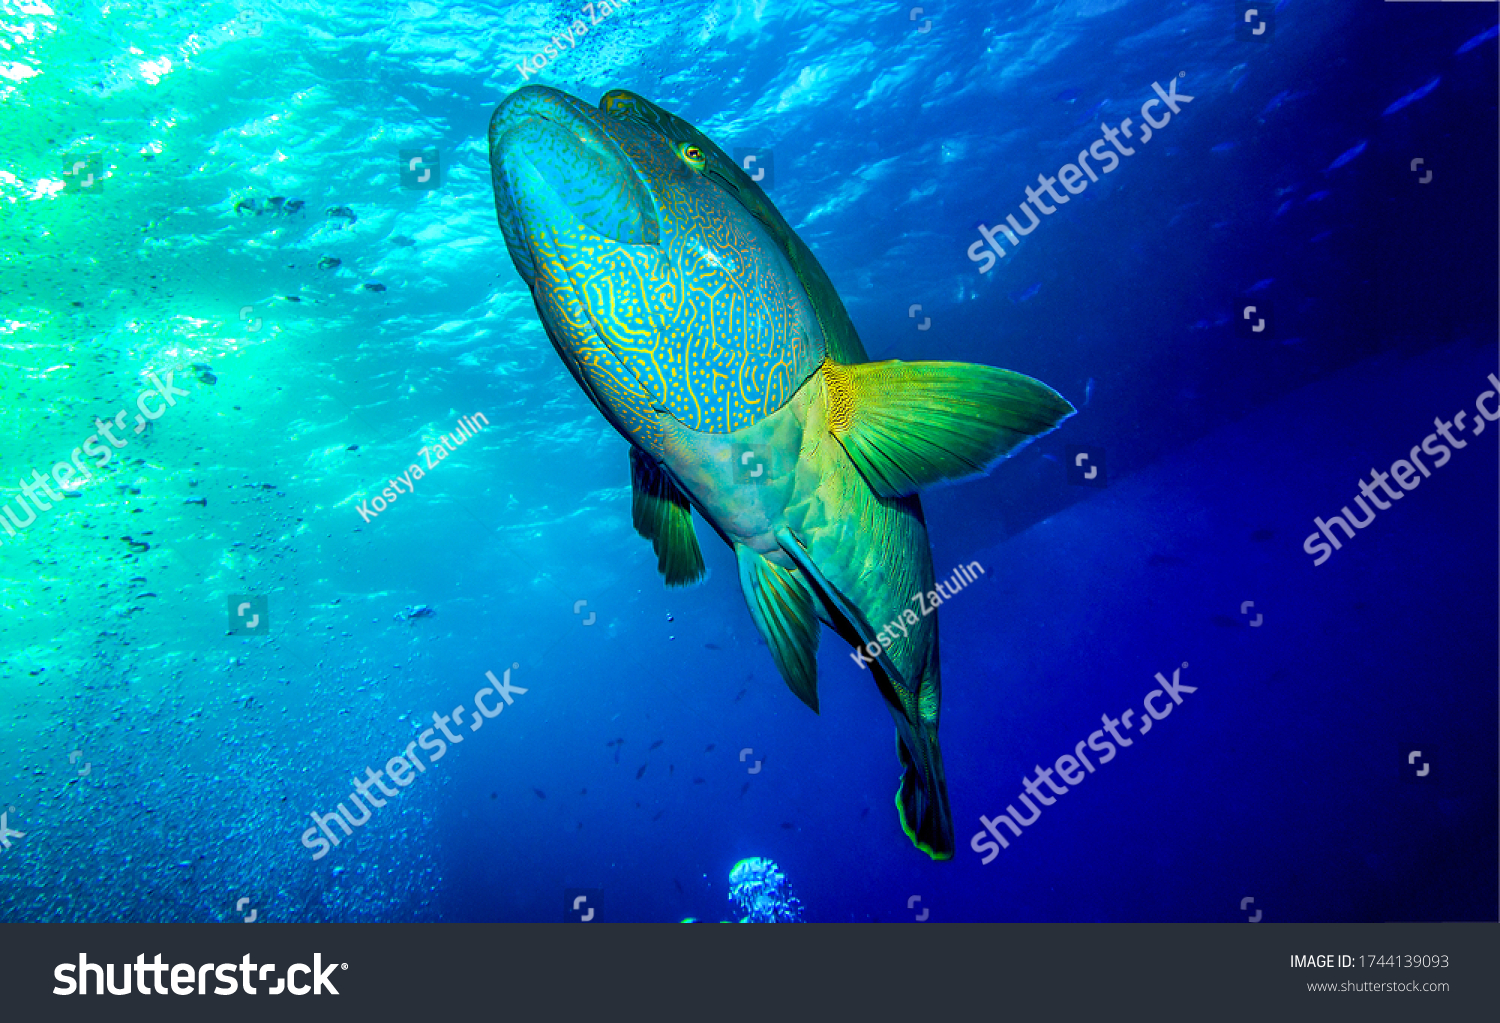 Fish in ocean underwater scene. Ocean fish closeup under water #1744139093